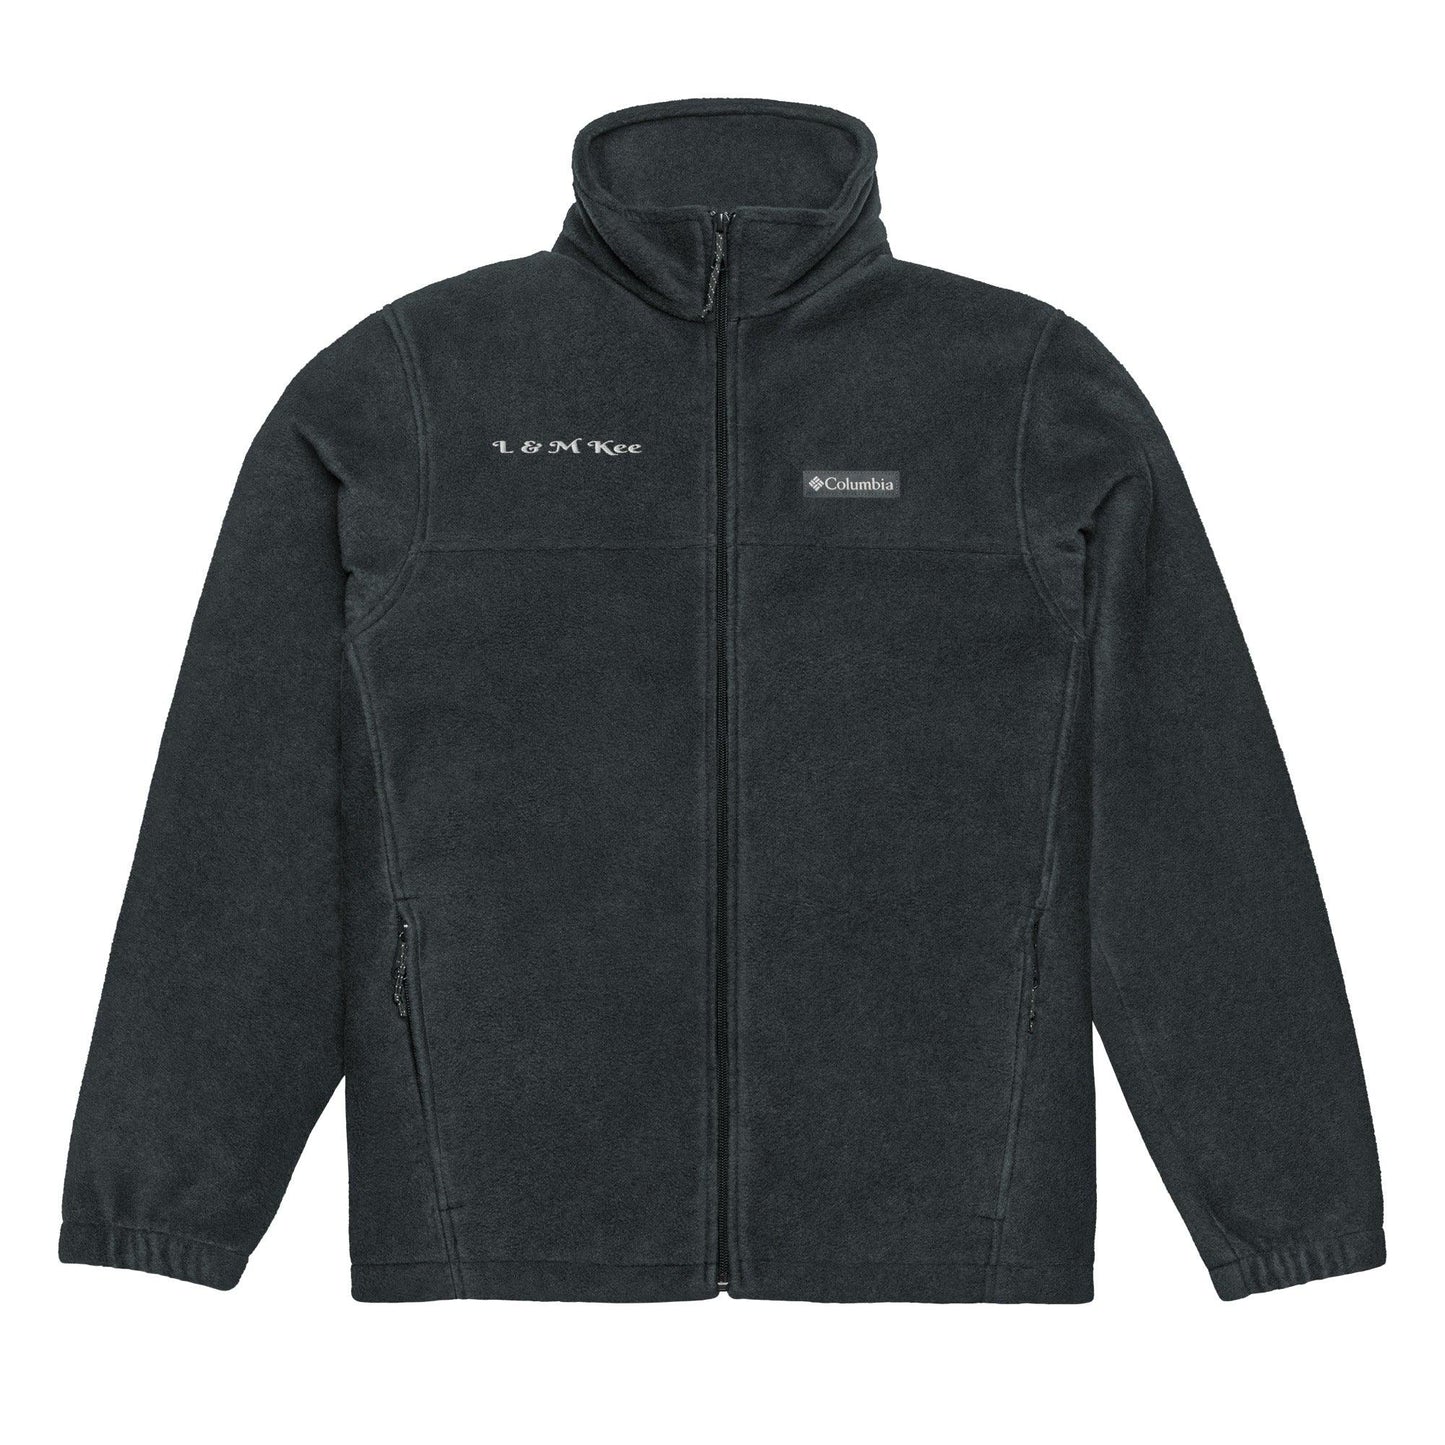 L & M Kee Unisex Columbia fleece jacket - L & M Kee, LLC